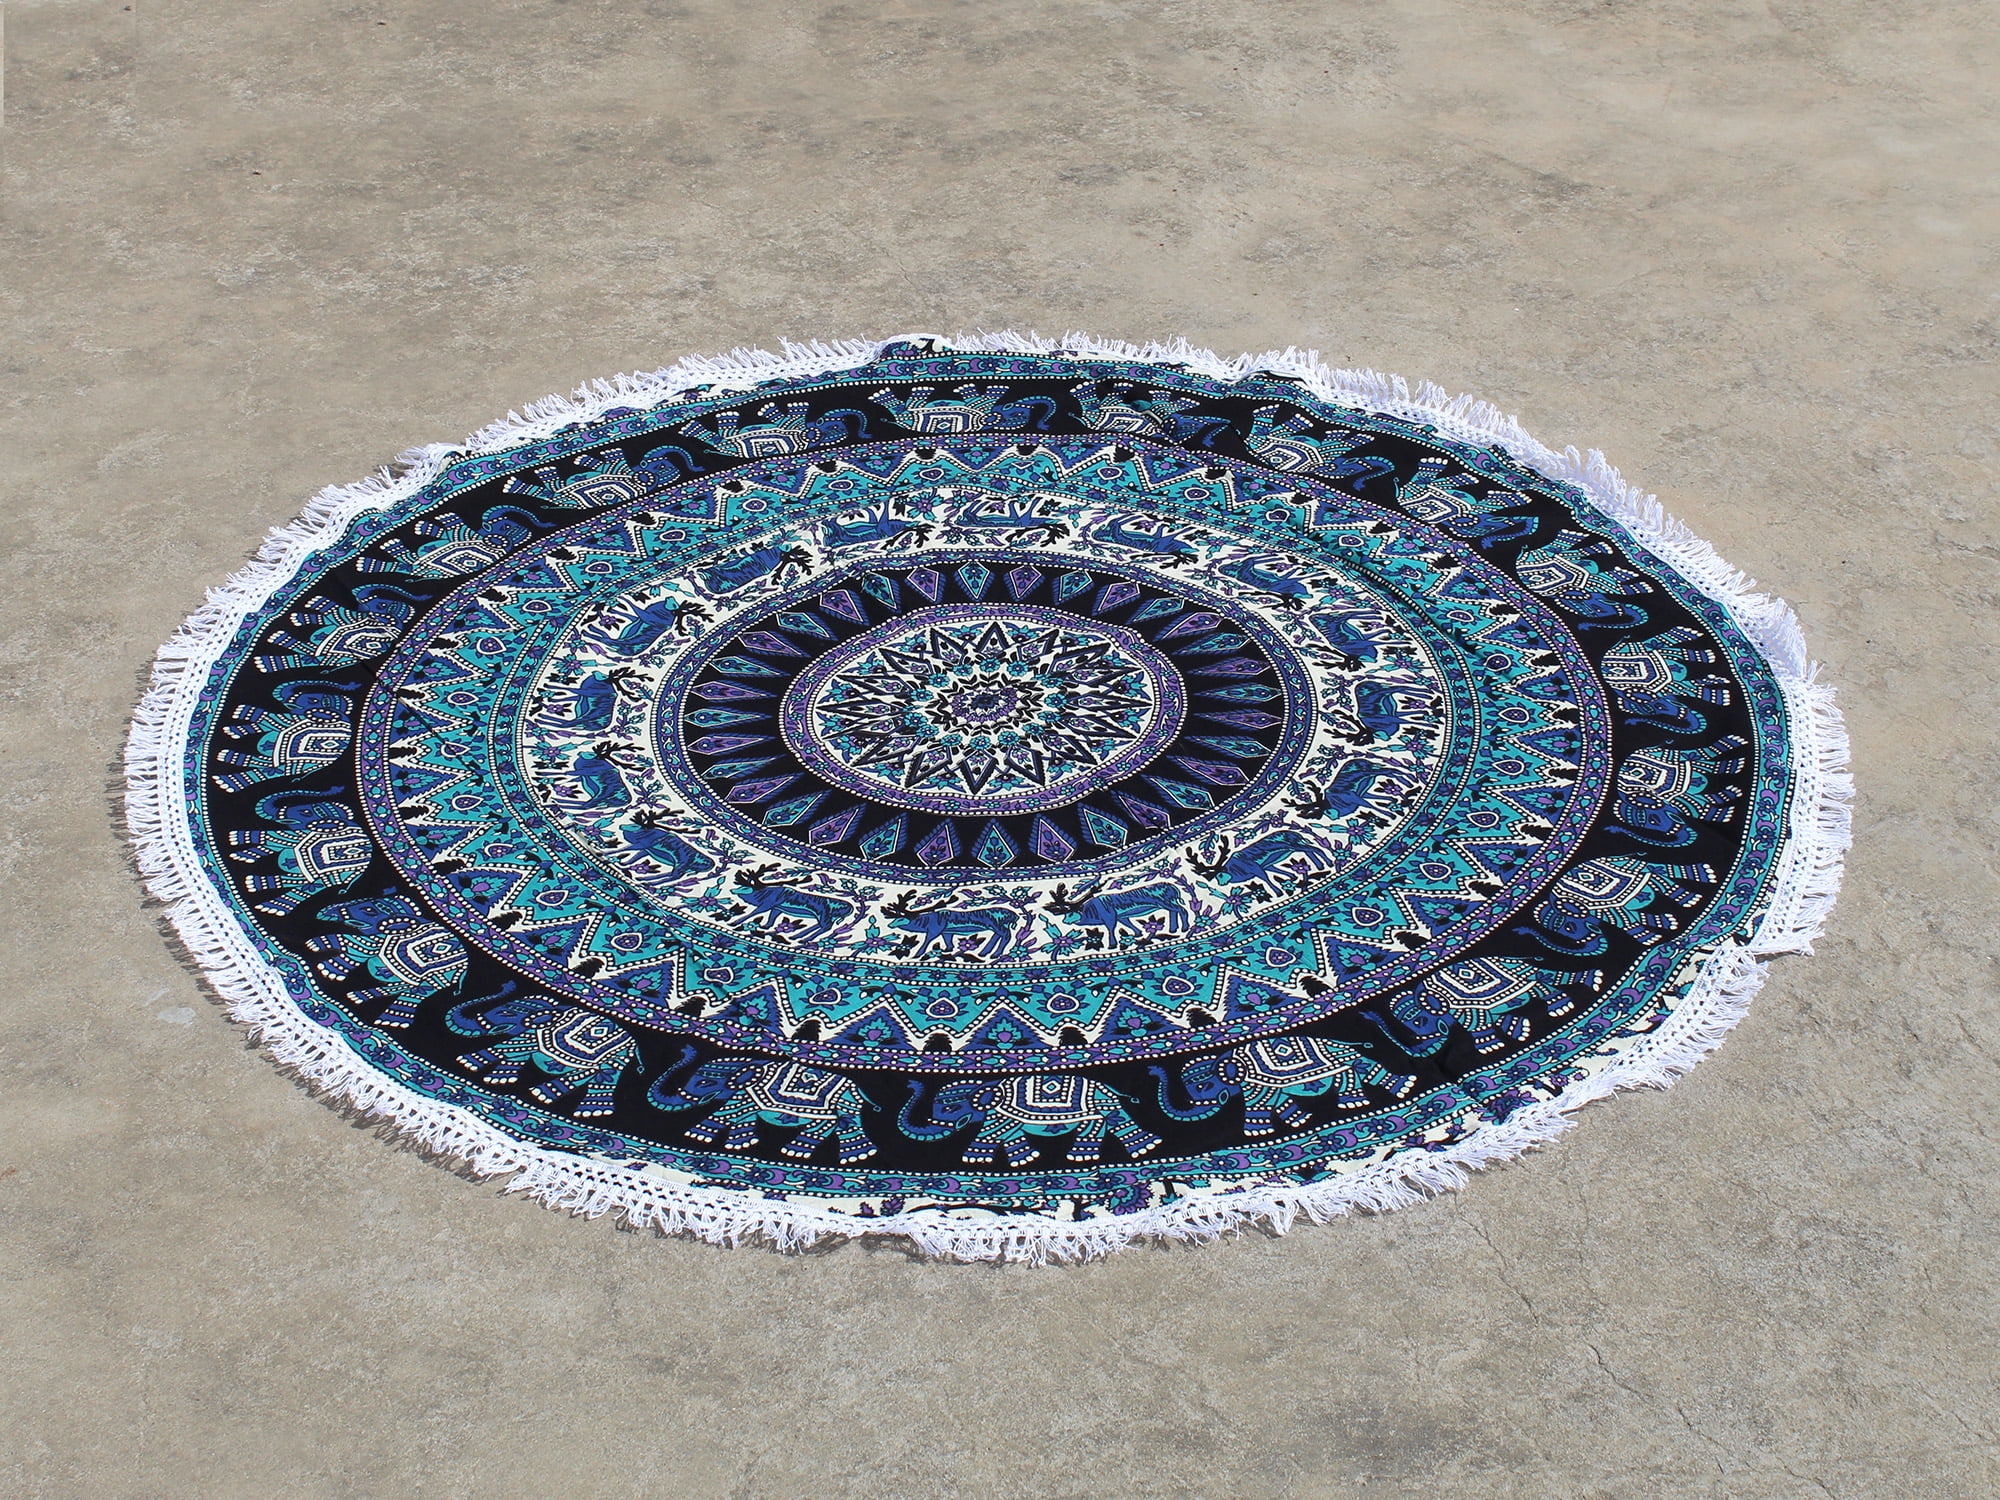 Glumes Beach Tapestry Hippie/Boho Mandala Beach Towel Blanket Indian Cotton Bohemian Round Table Cloth Mandala Decor/Yoga Mat Meditation Picnic Rugs 